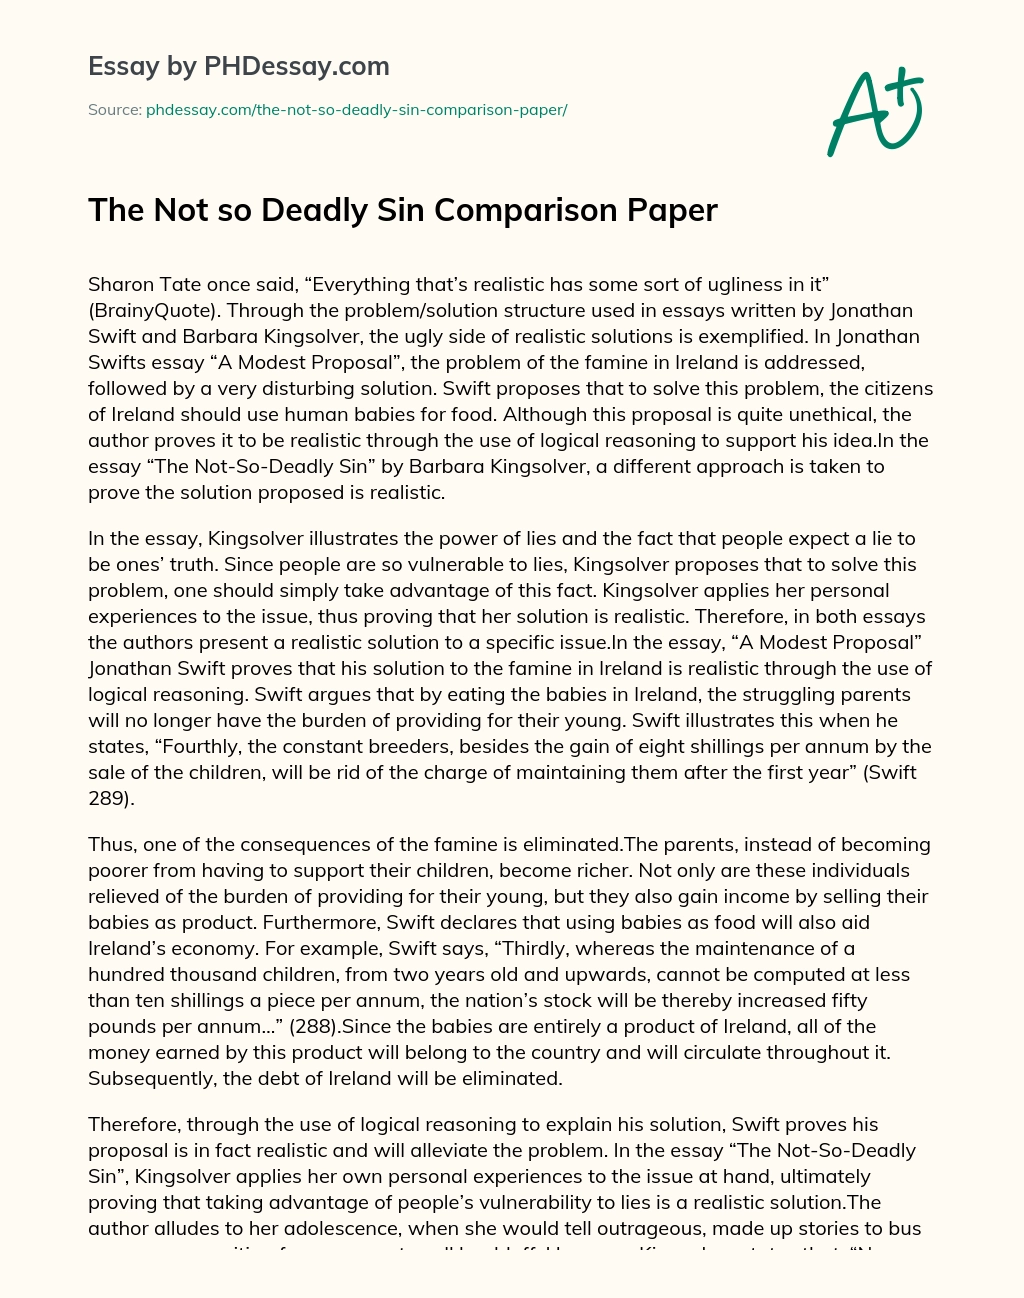 The Not so Deadly Sin Comparison Paper essay